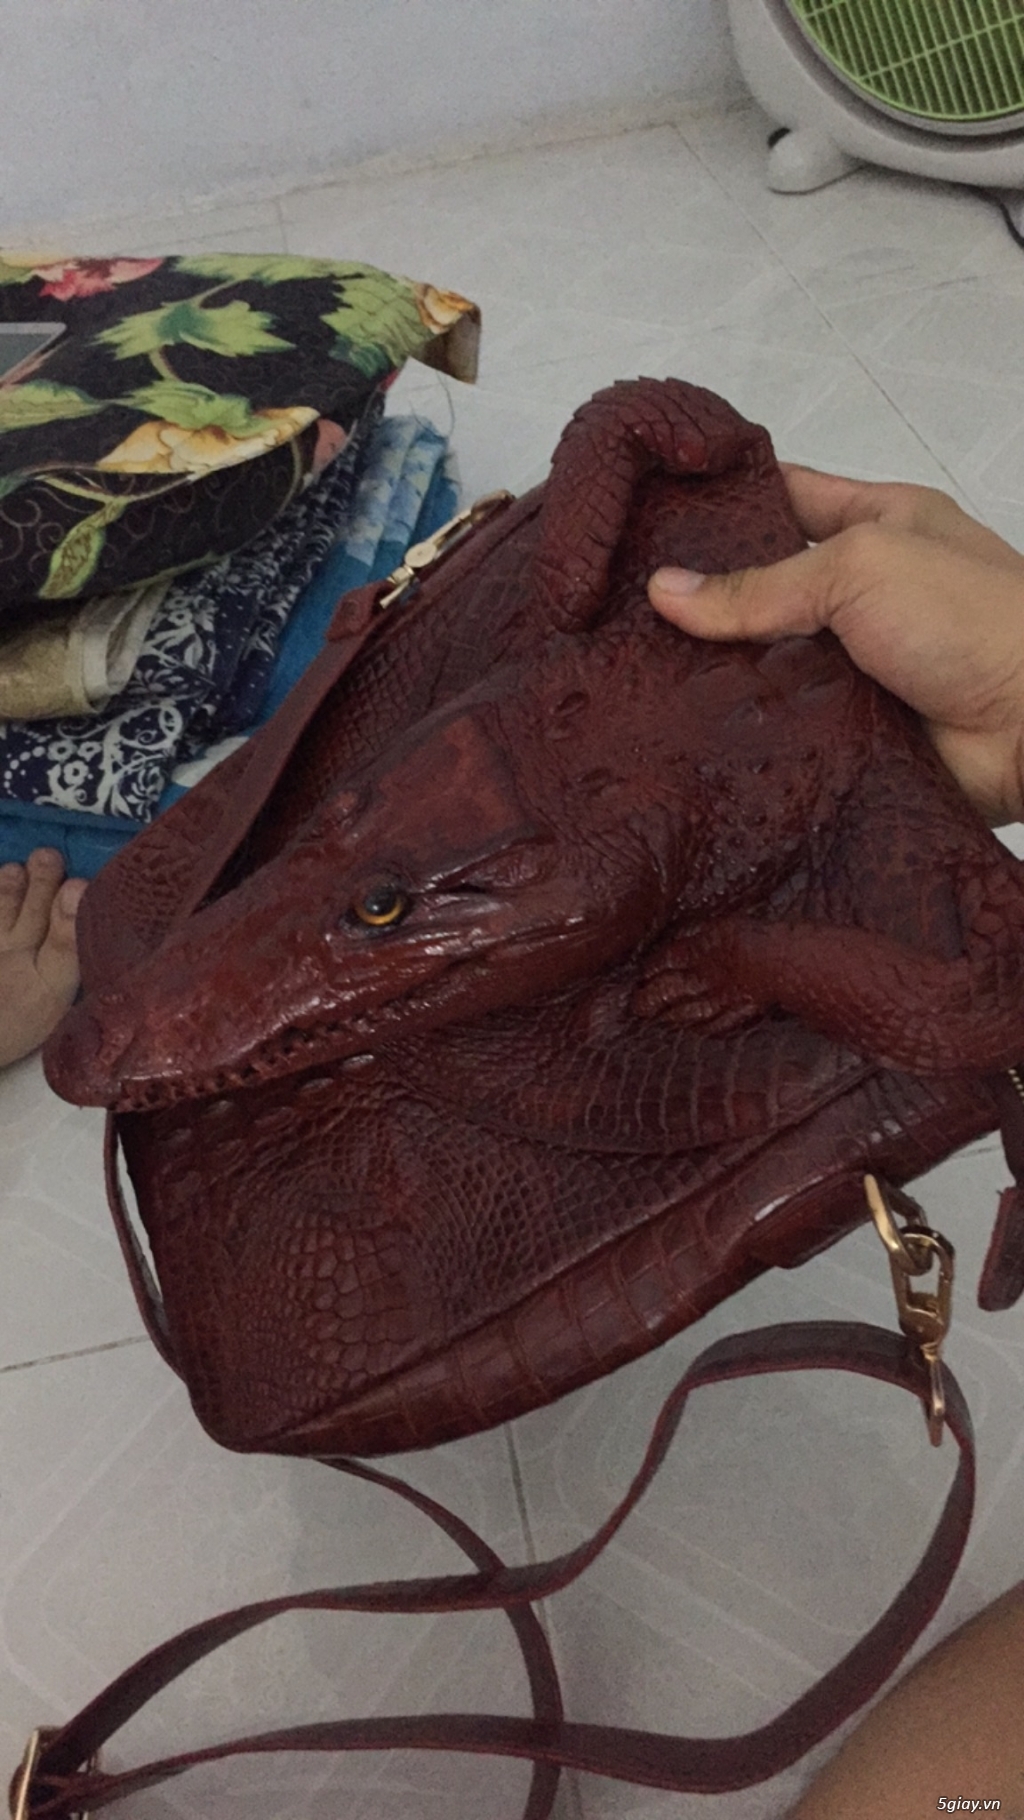 Túi da cá sấu đựng ipad - 1